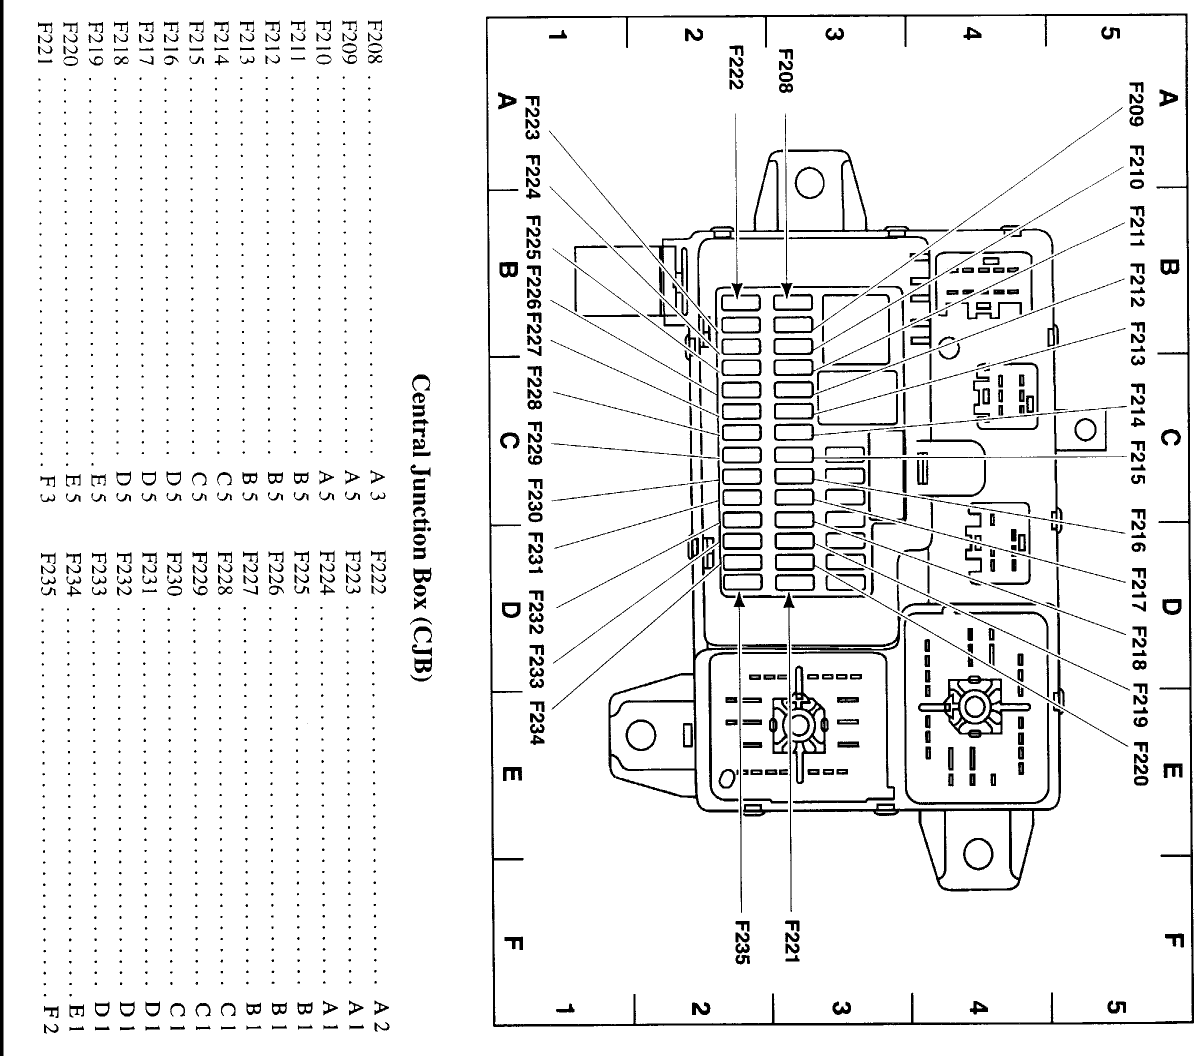 2000 lincoln navigator fuse diagram